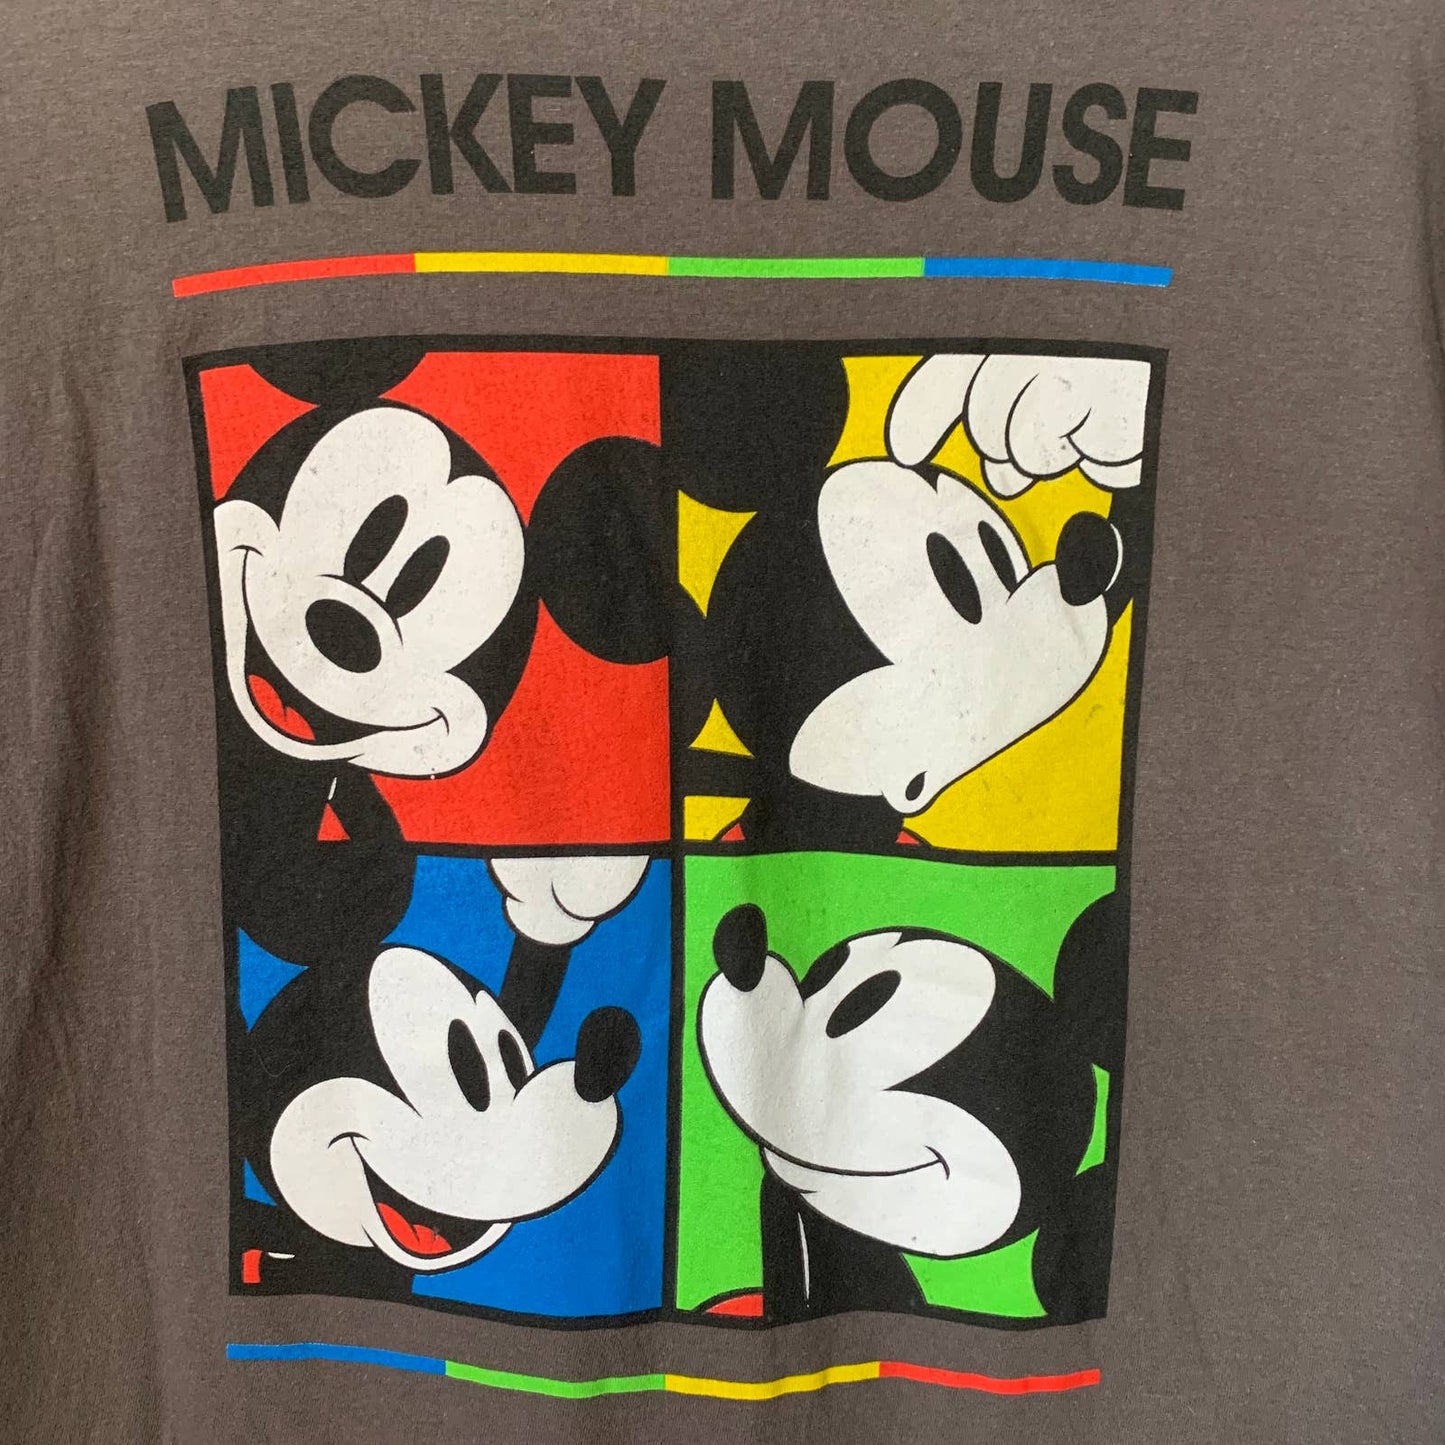 Mickey Mouse retro graphic t-shirt SZ L